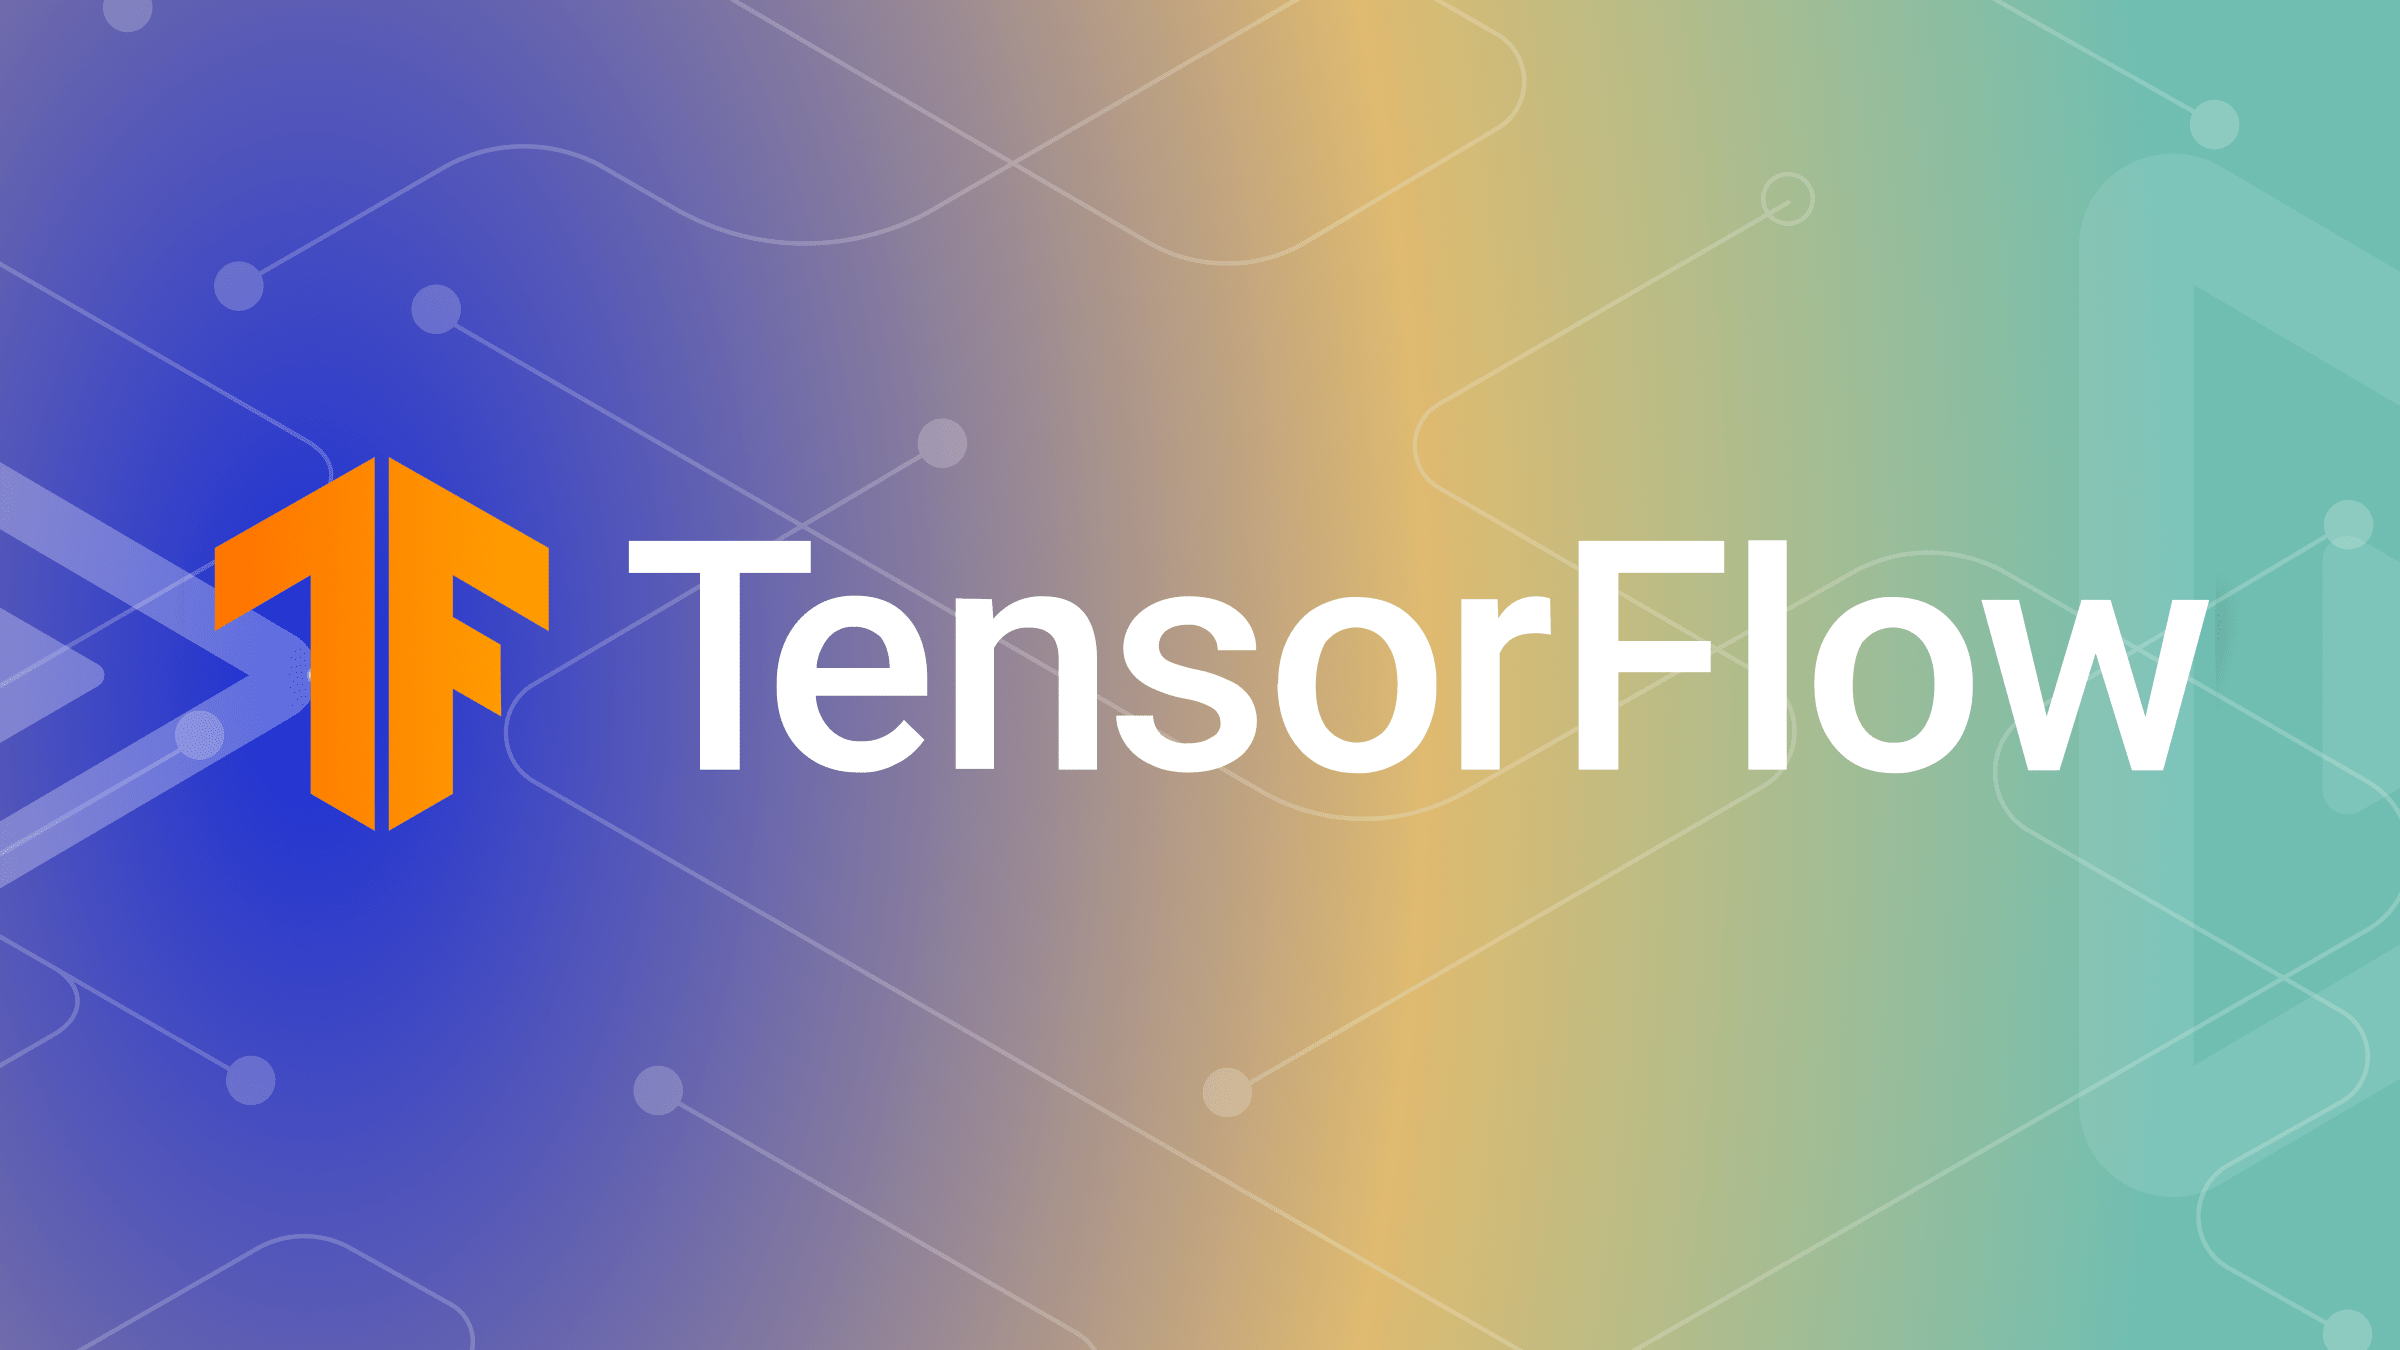 TensorFlow: A Game Changer for Development